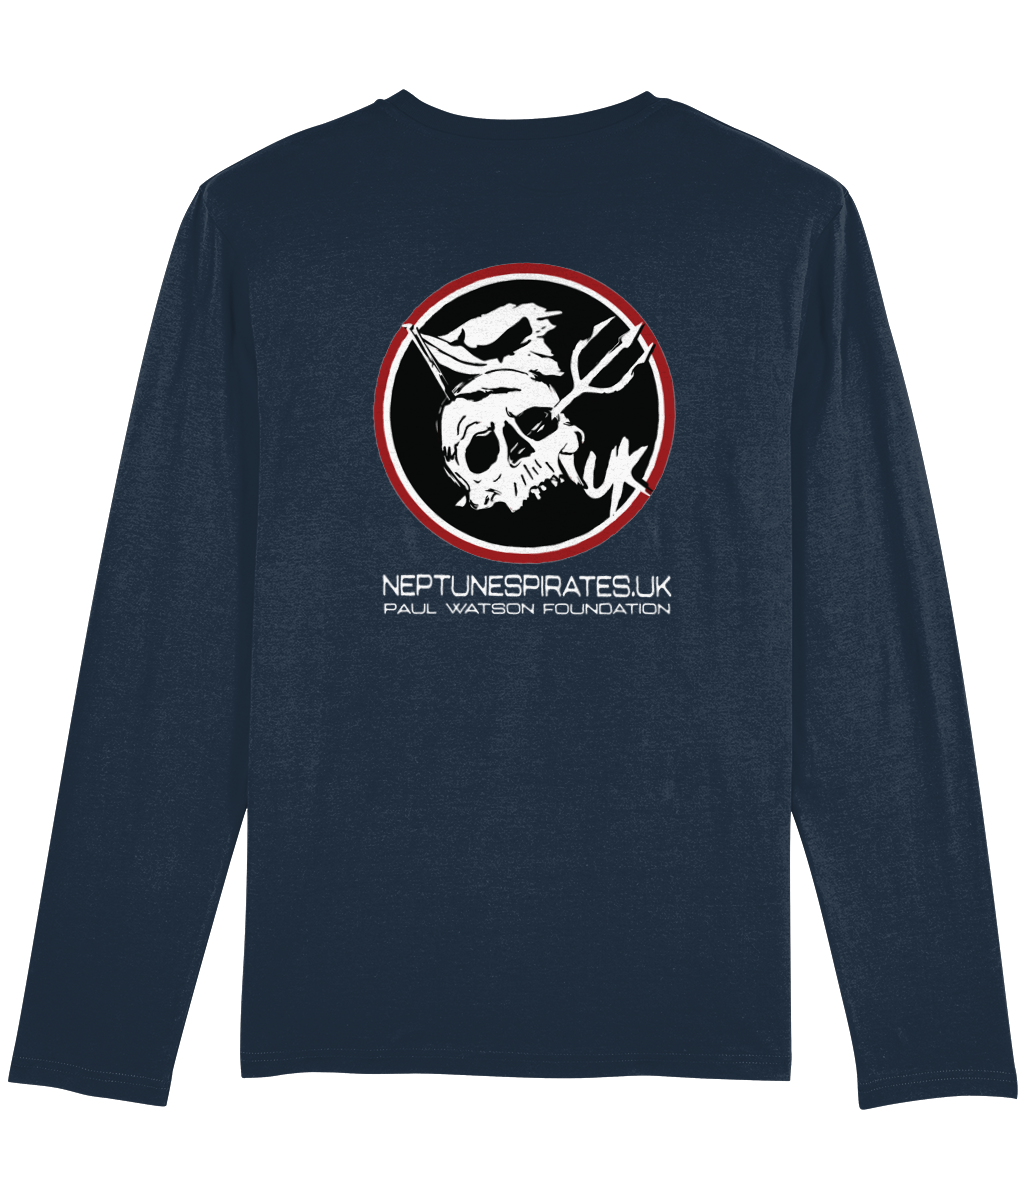 Neptune's Pirates Unisex Long Sleeve T-Shirt - Captain Paul Watson Foundation (t/a Neptune's Pirates)